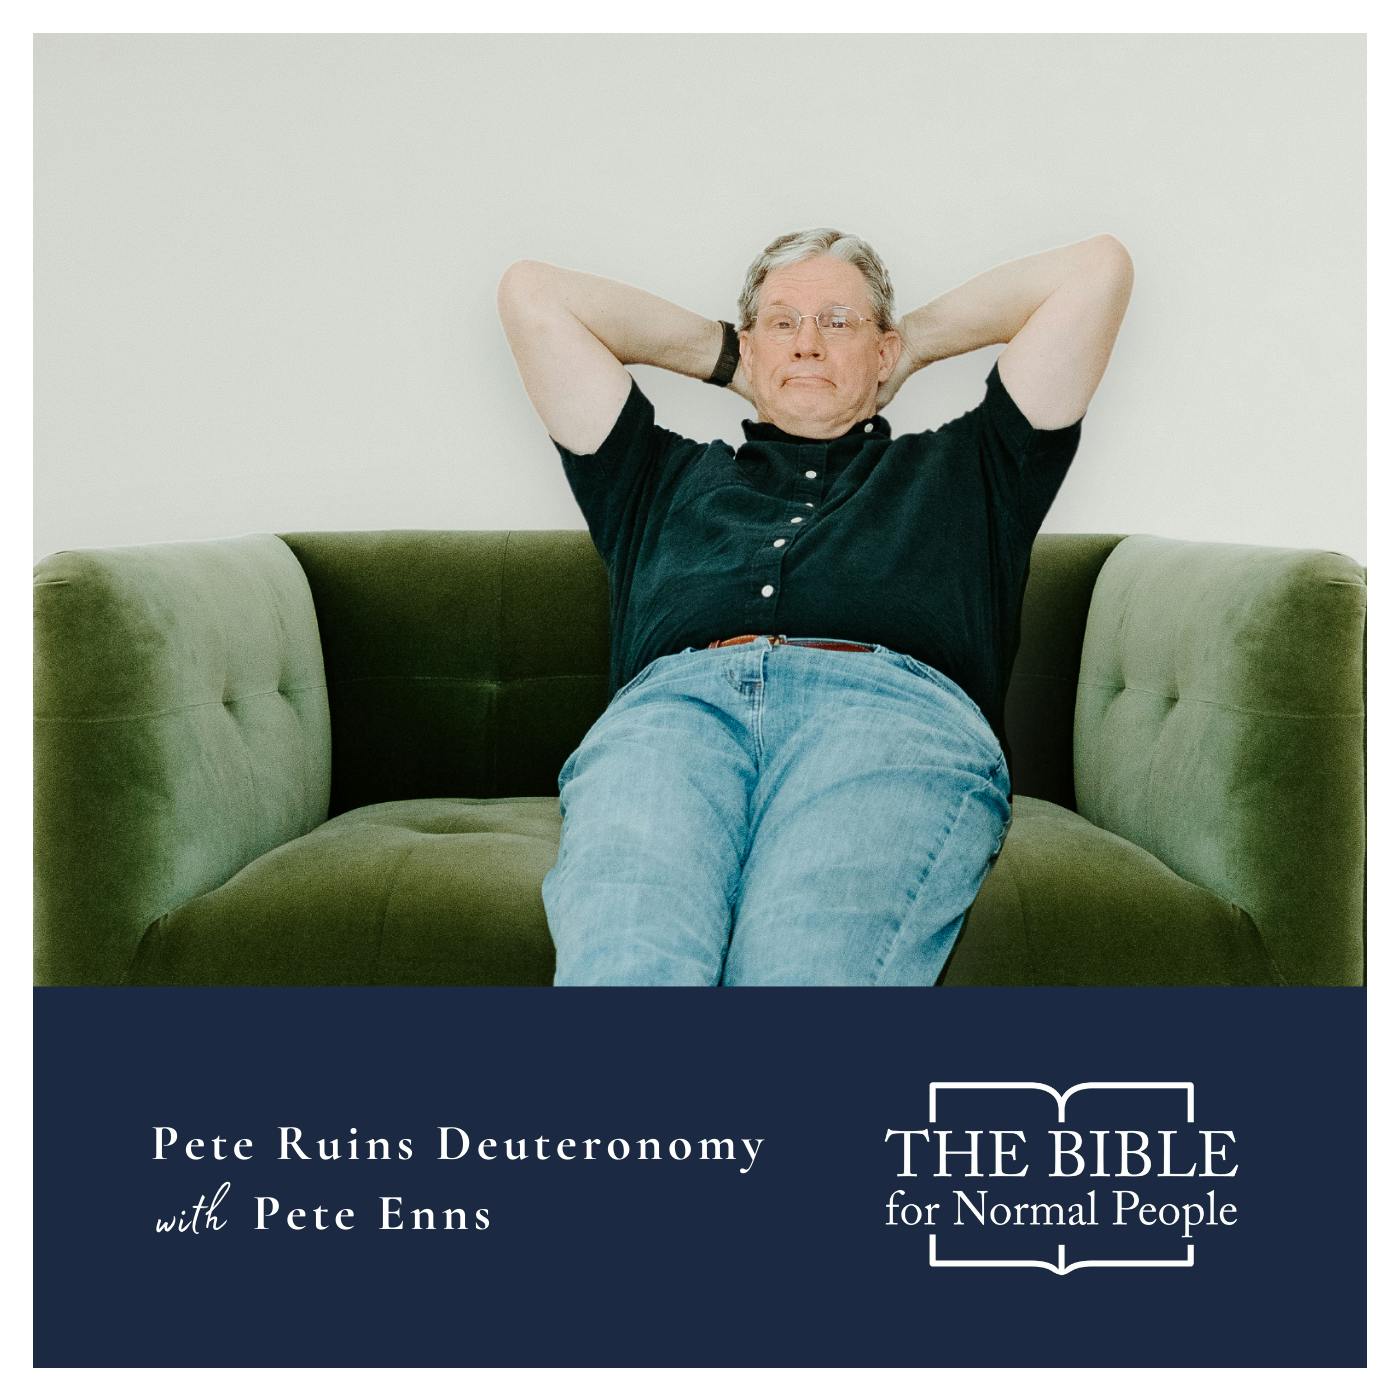 Episode 218: Pete Enns - Pete Ruins Deuteronomy